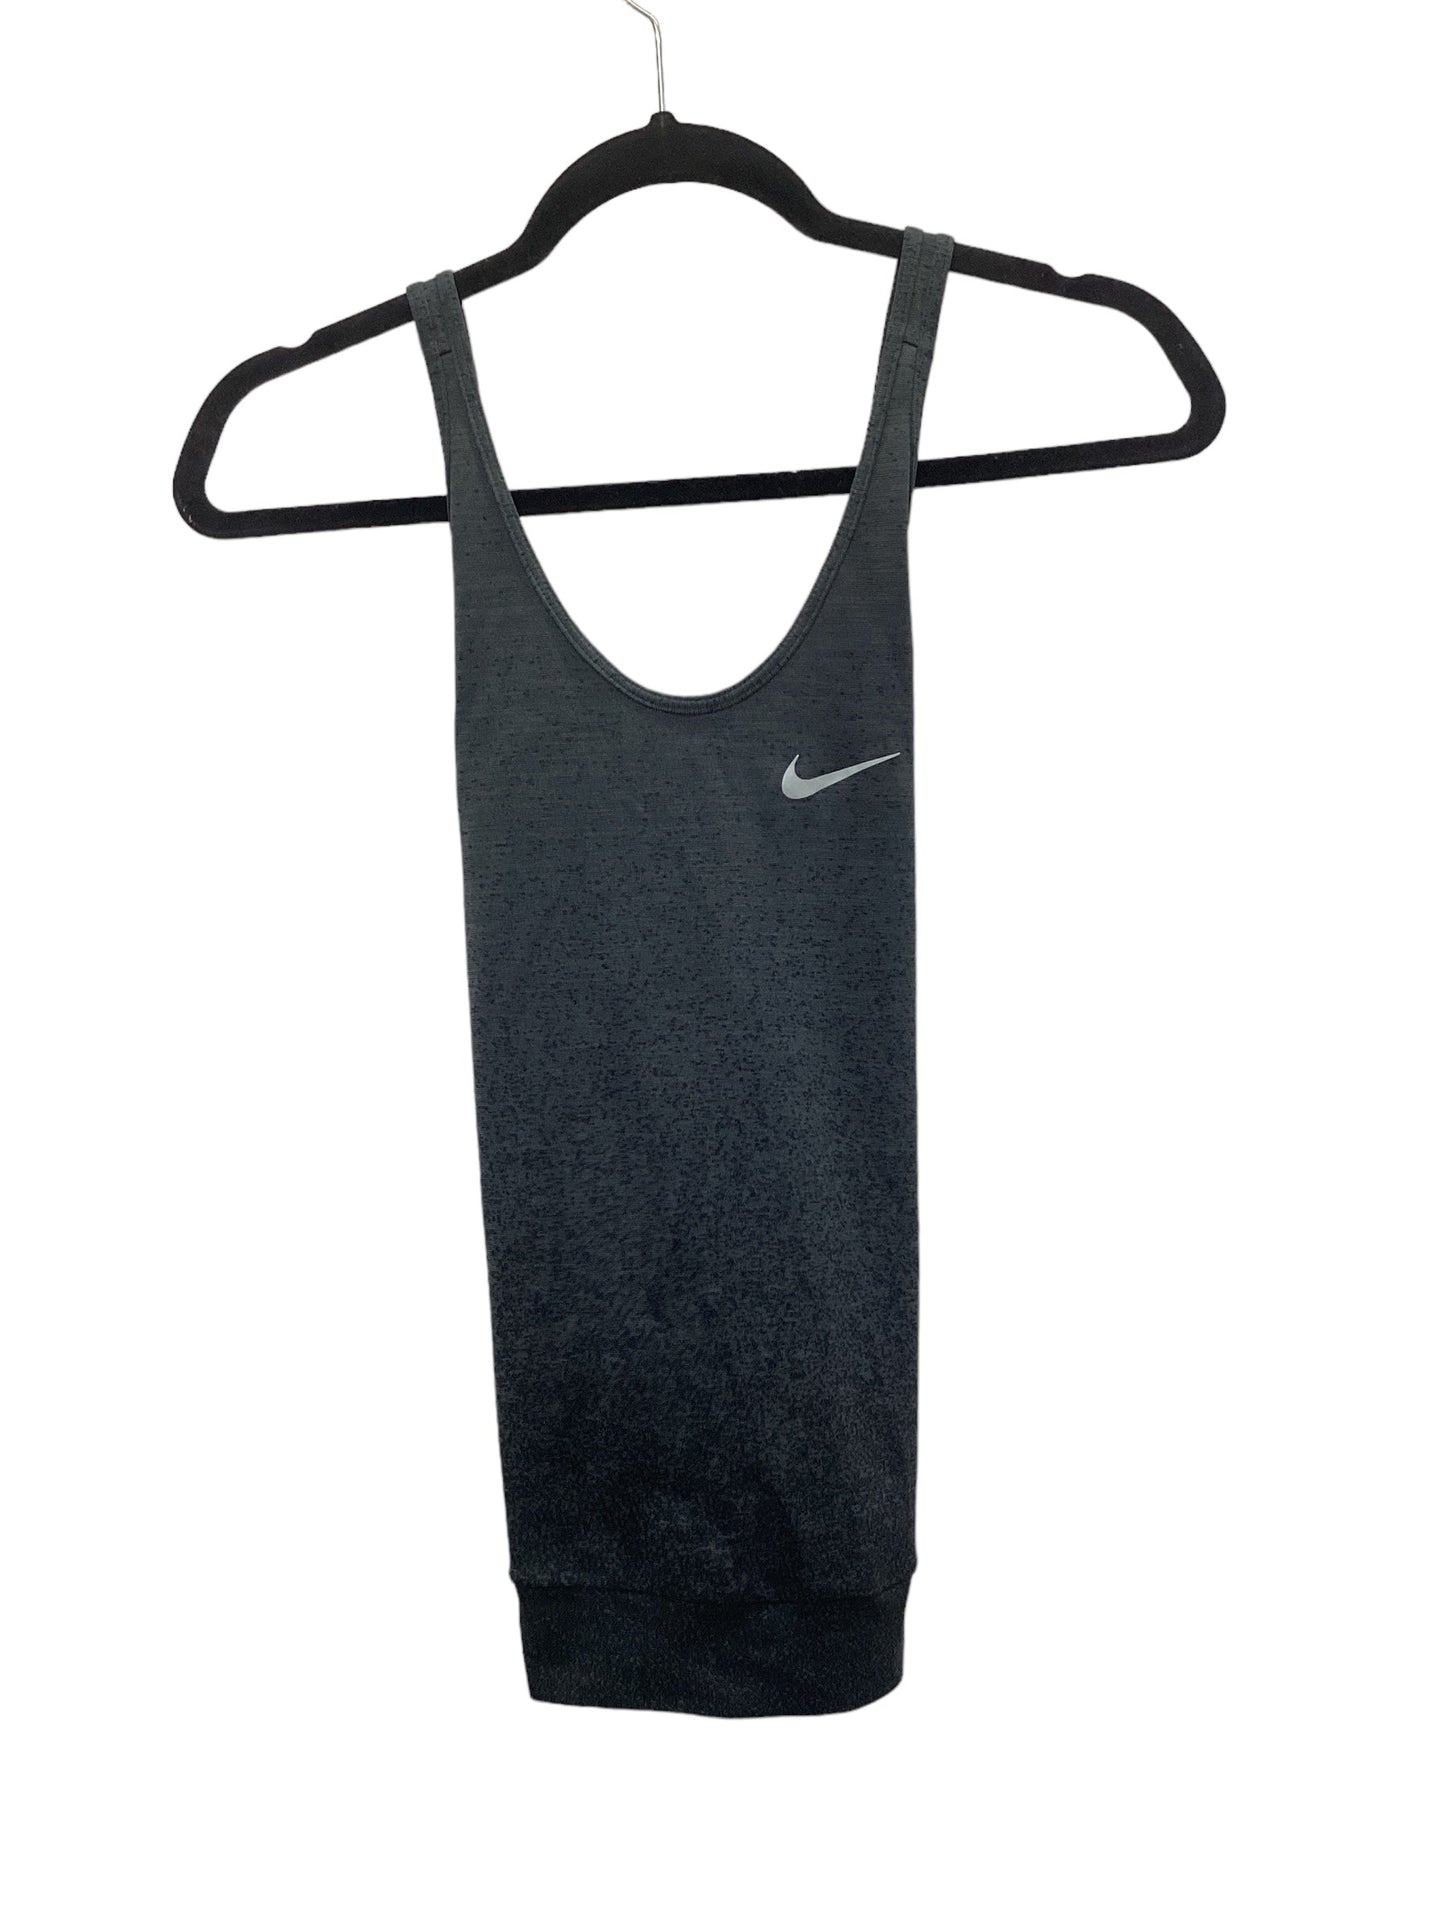 Grey Athletic Tank Top Nike Apparel, Size M